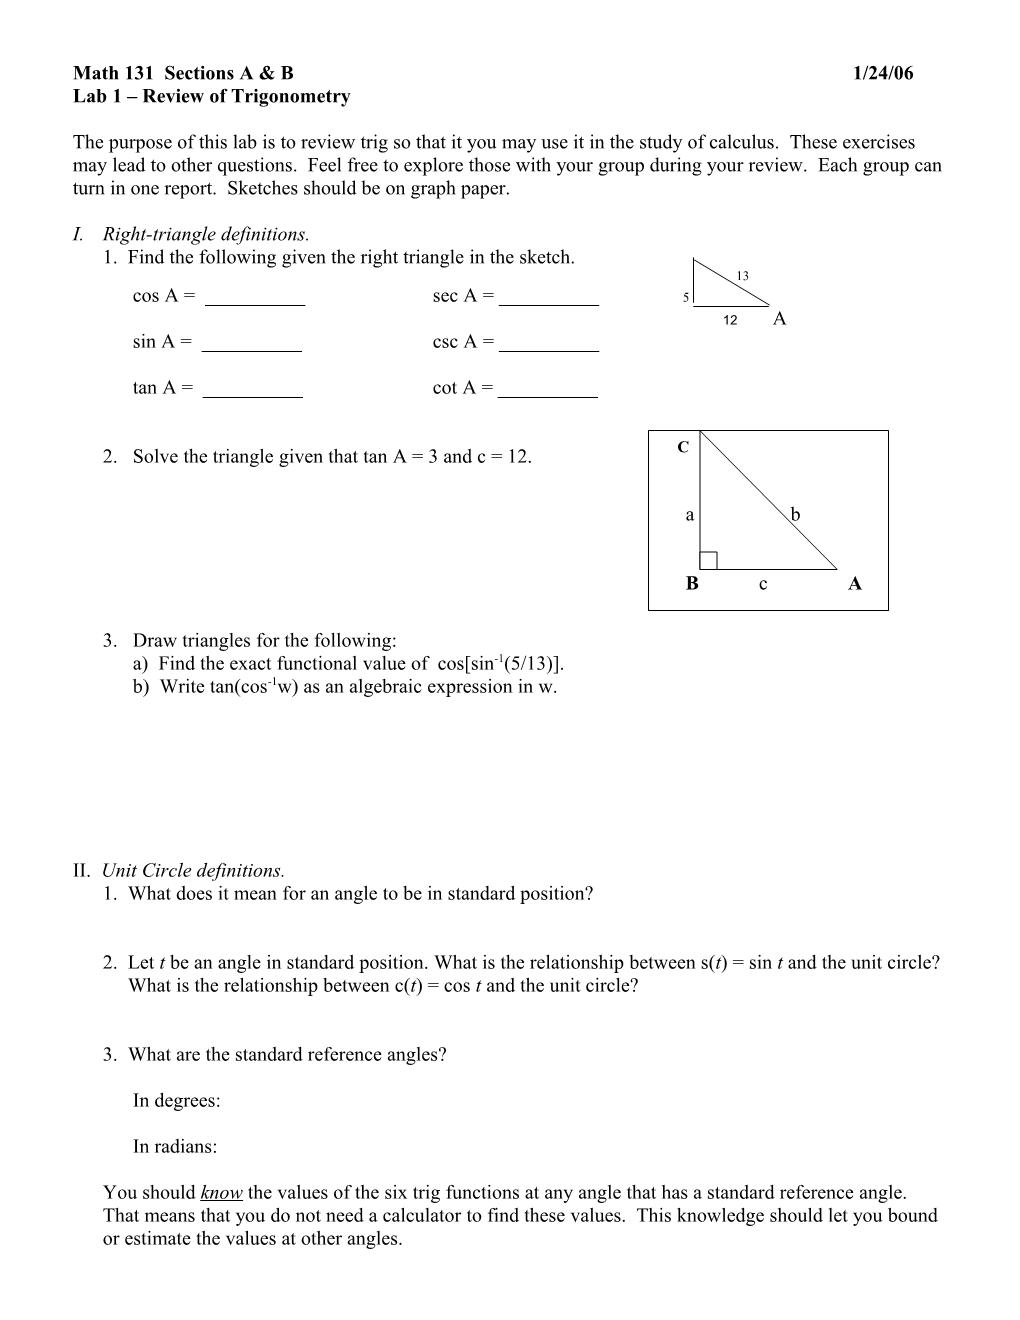 Lab 1 Review of Trigonometry